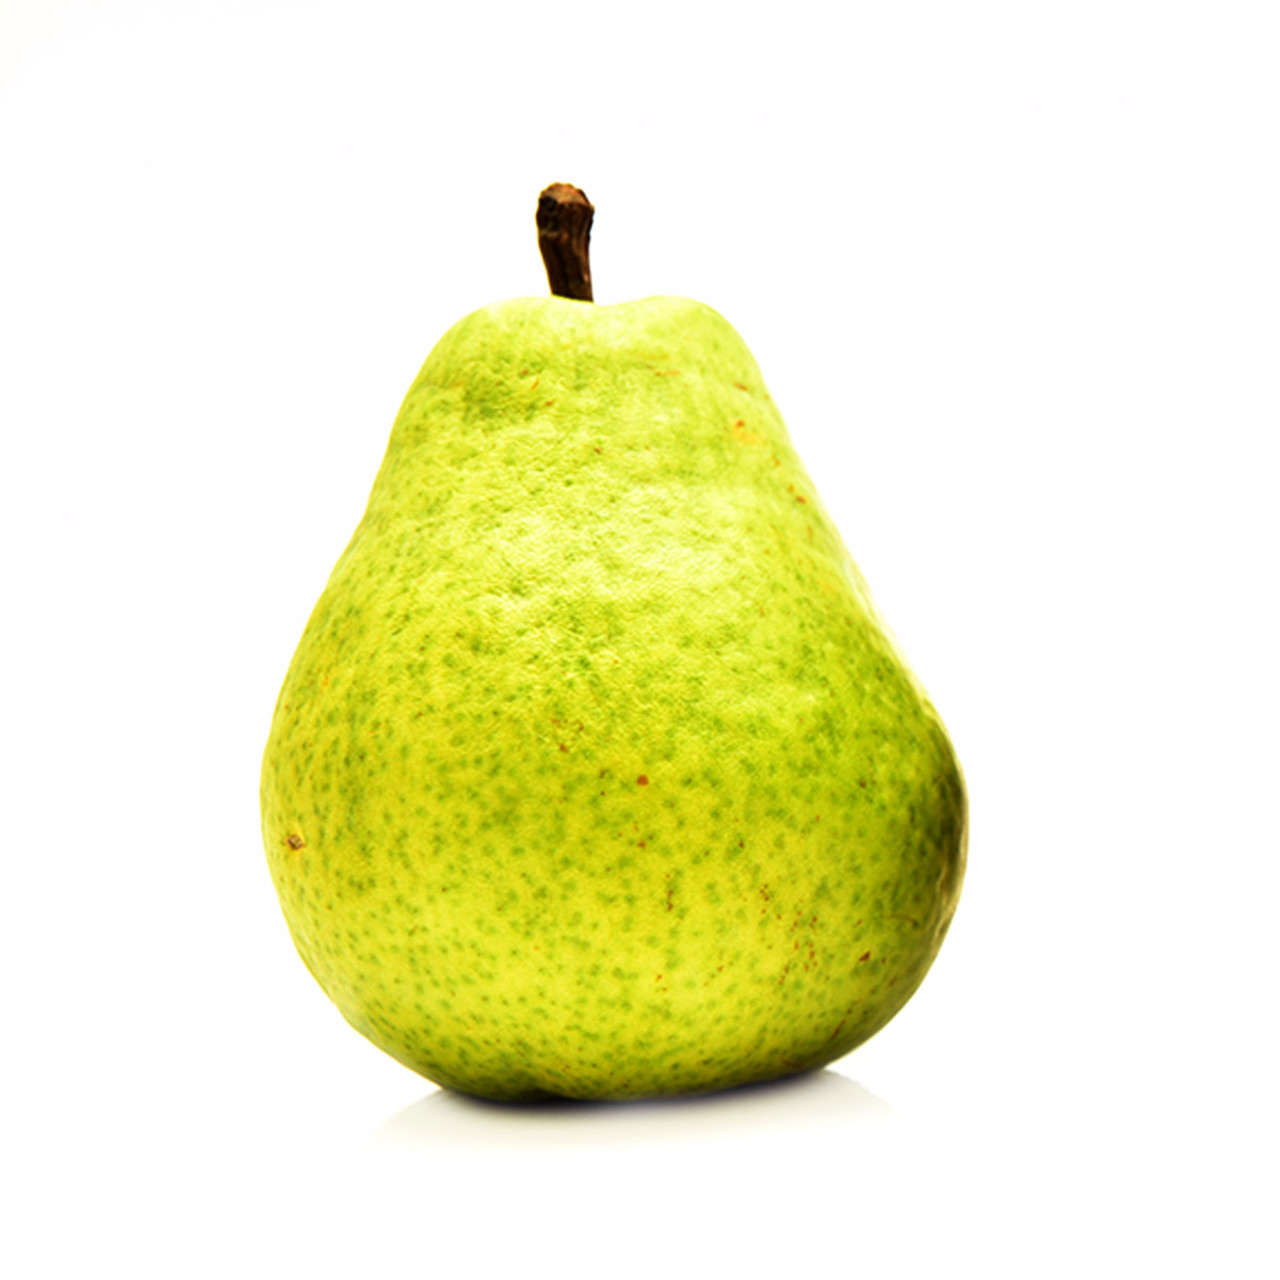 Organic Red Anjou Pears – Beecher Hill Farms